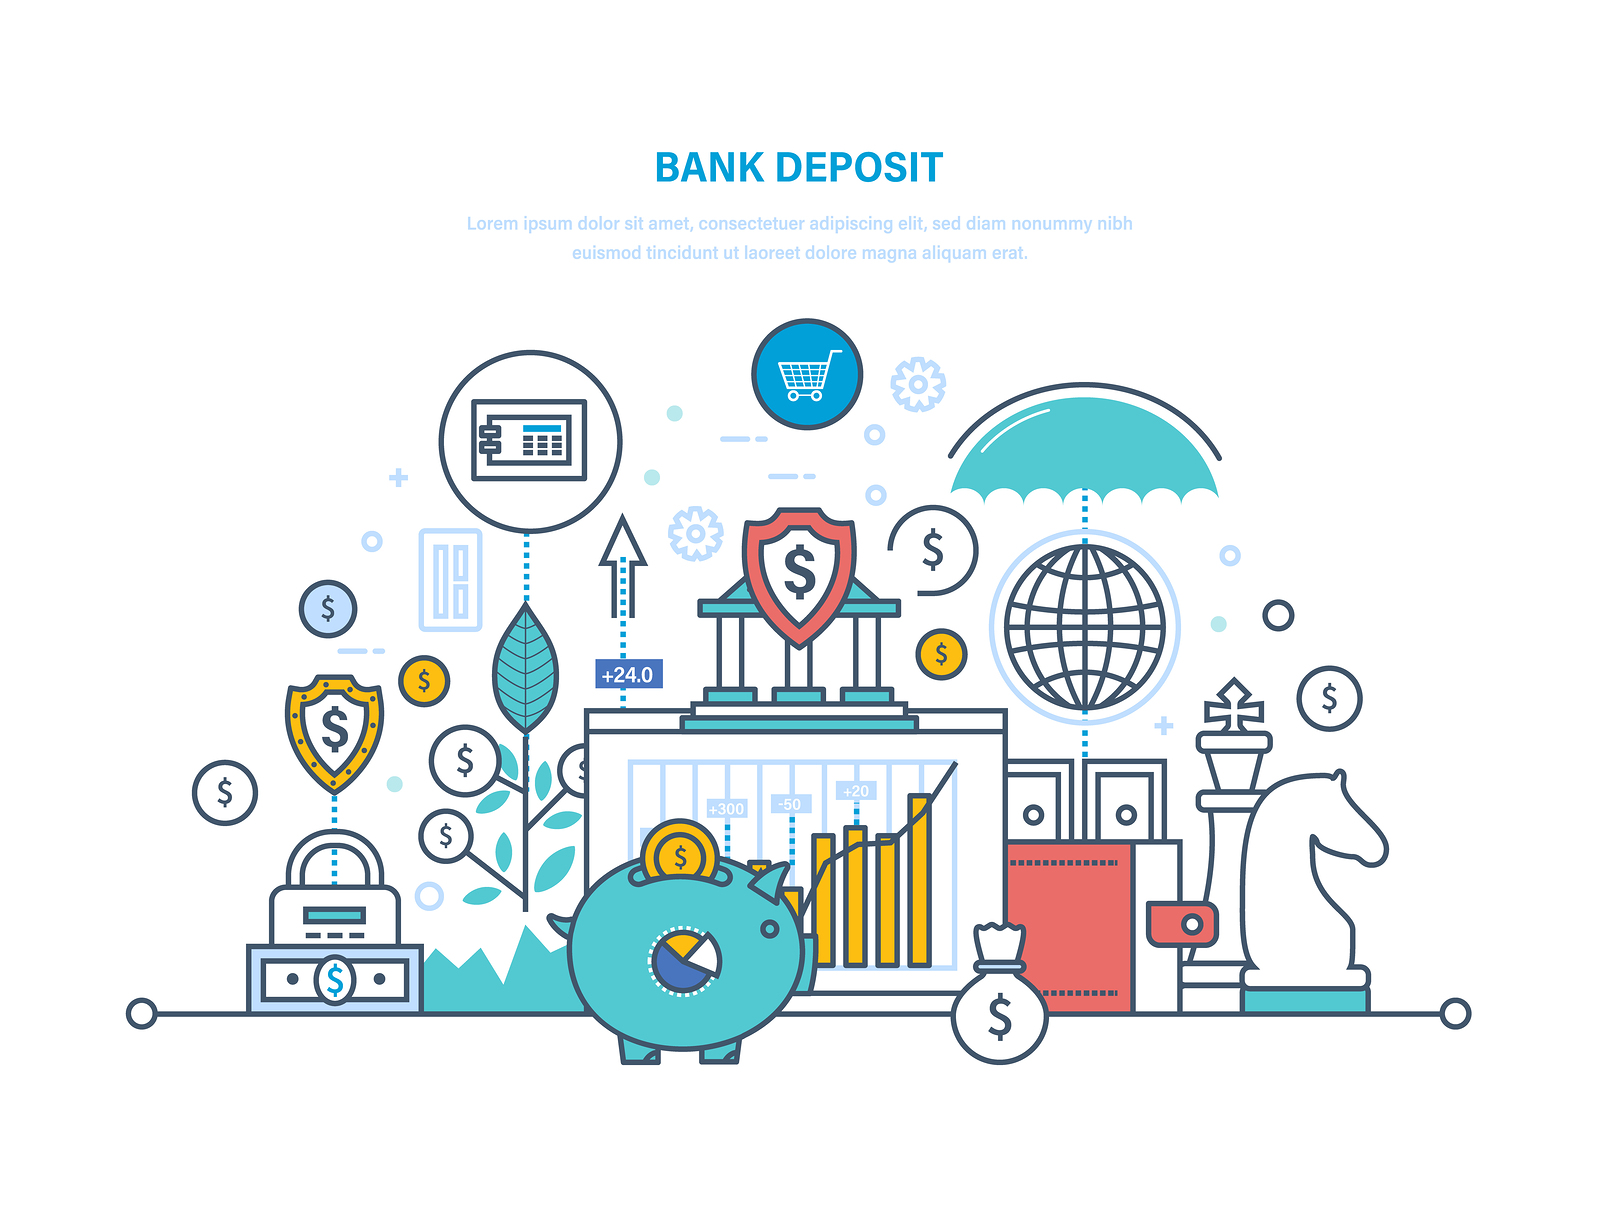 bigstock-Bank-Deposit-Concept-Financia-226471009.jpg